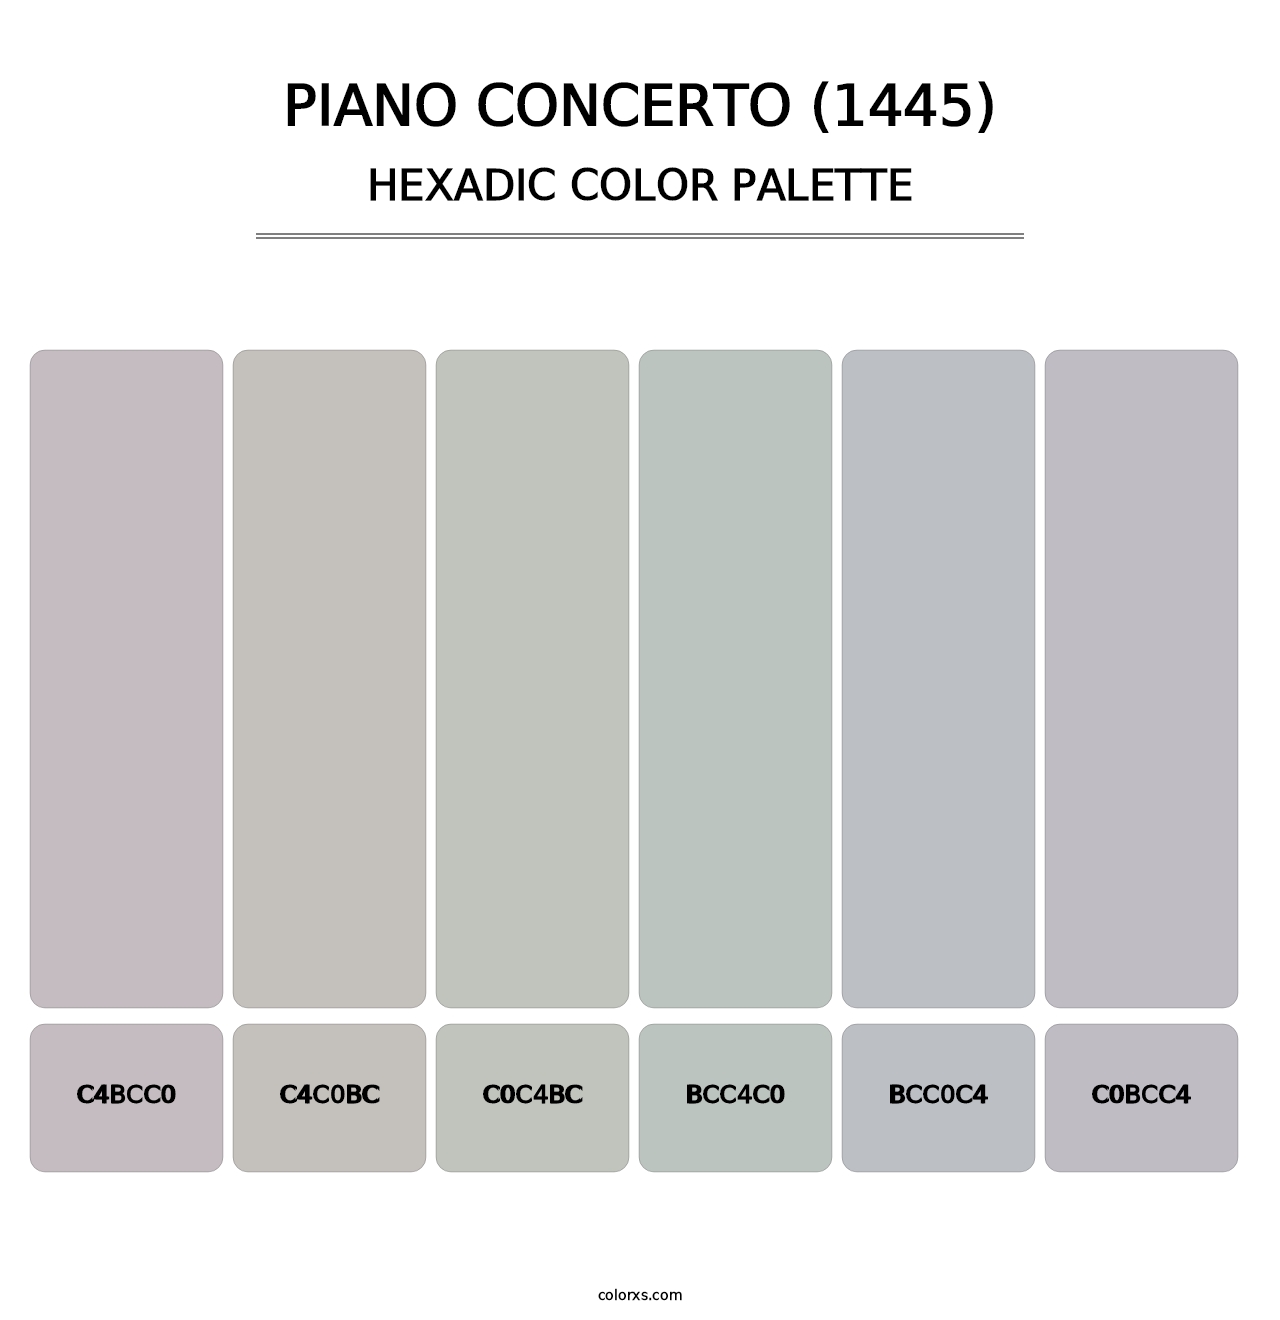 Piano Concerto (1445) - Hexadic Color Palette